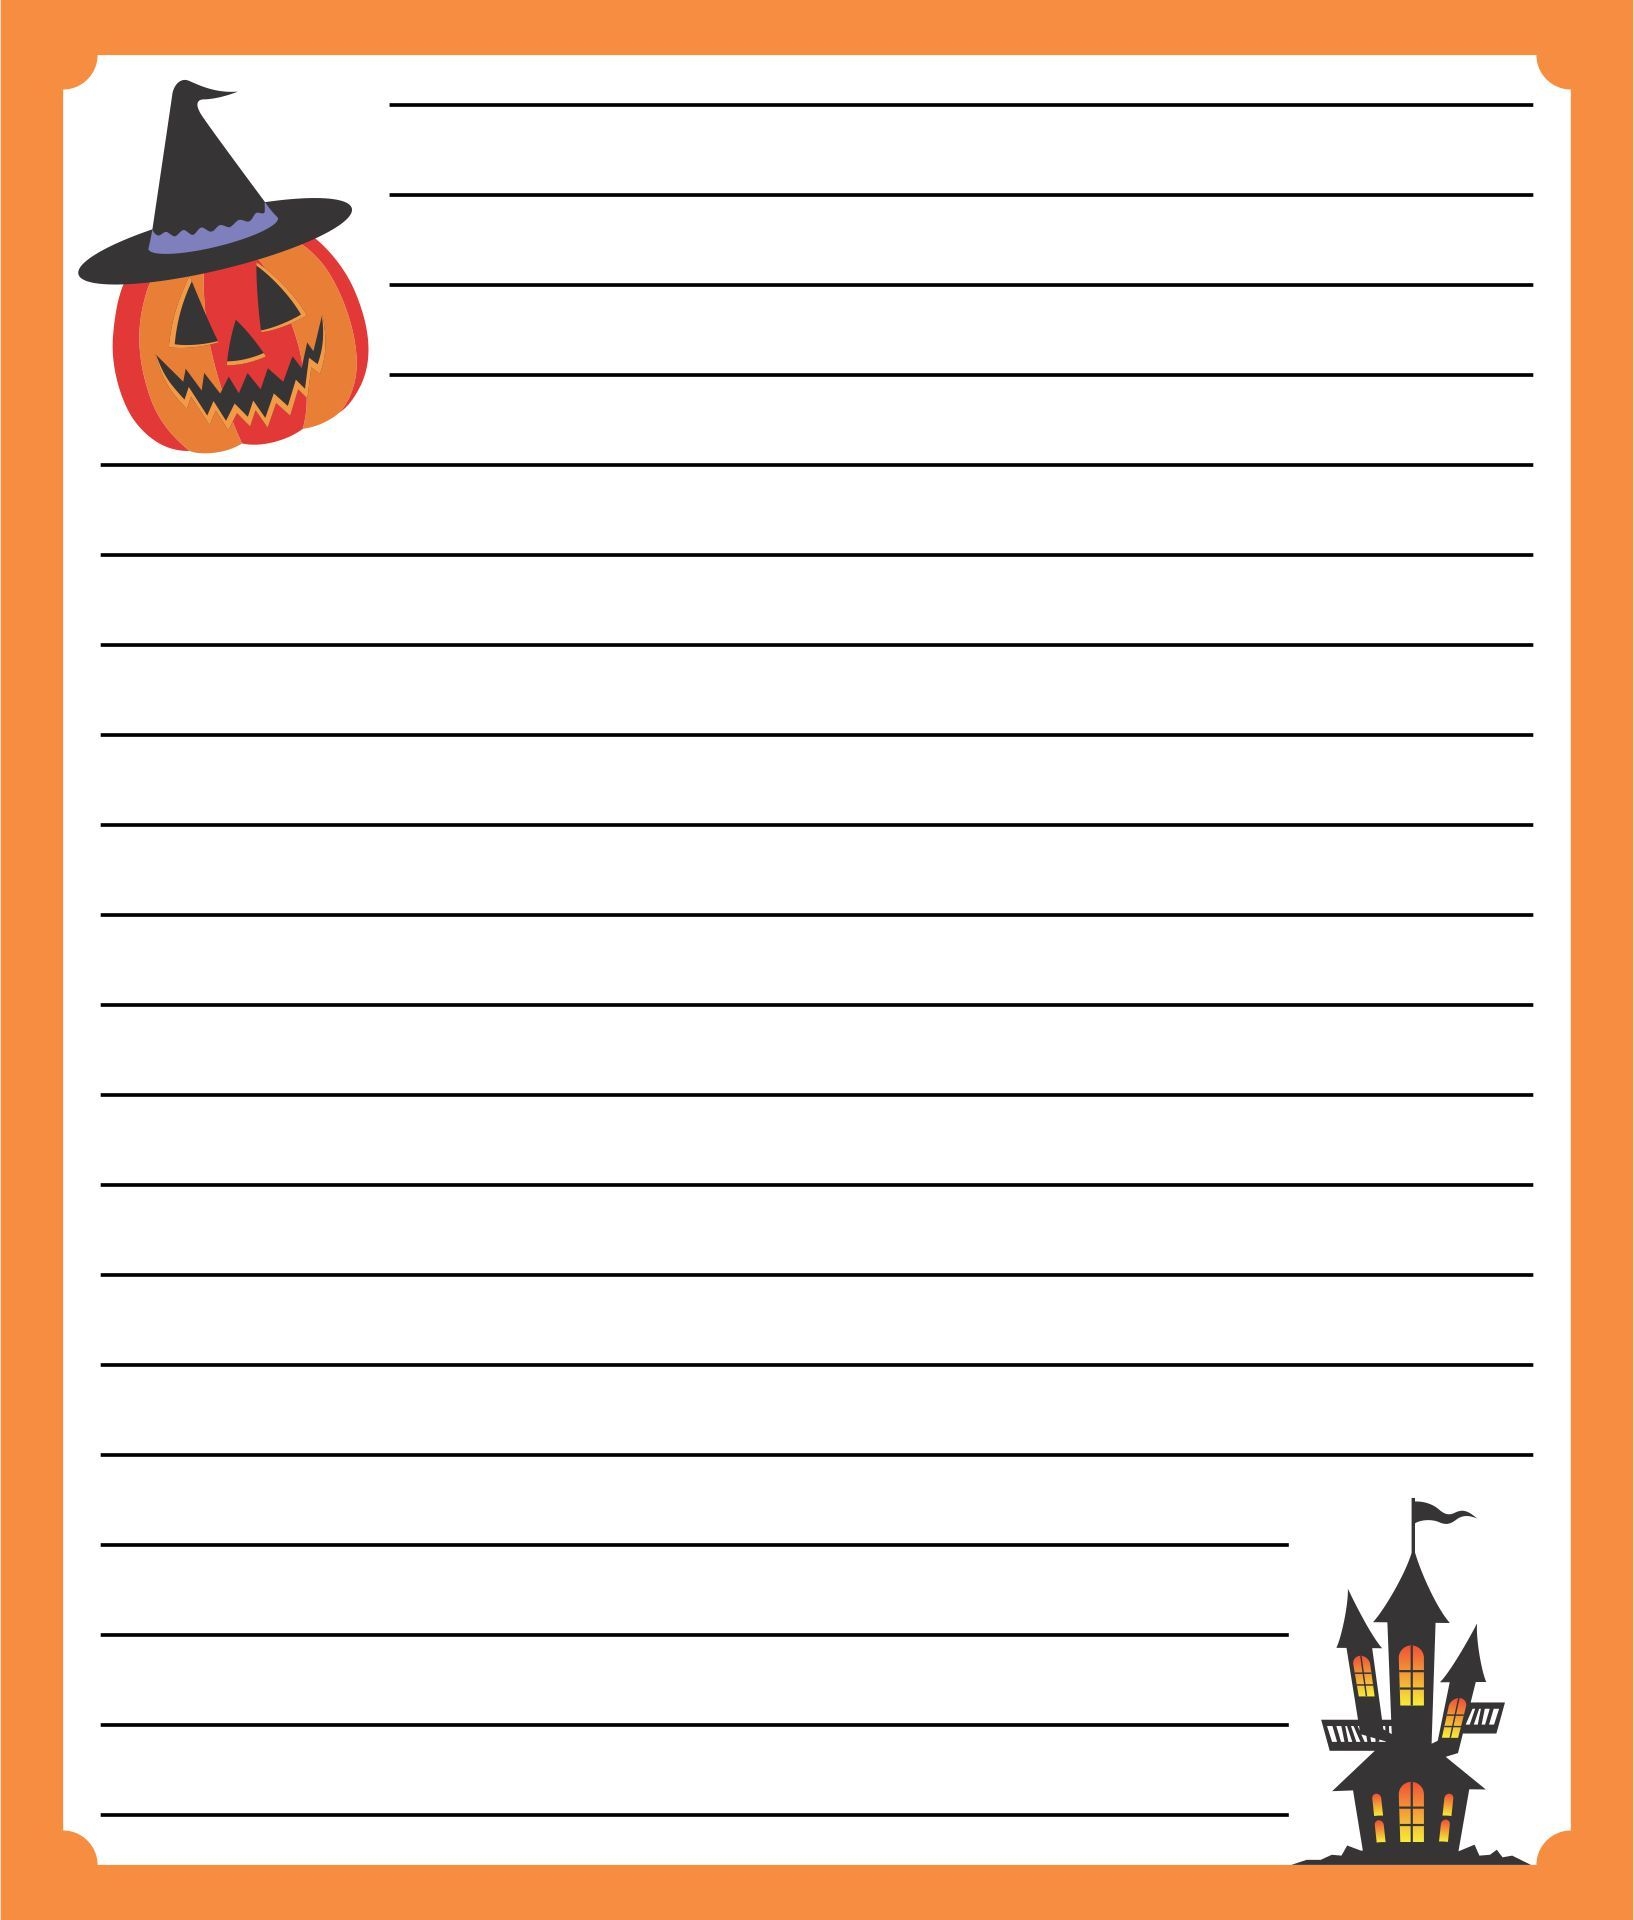 15 Best Free Printable Halloween Border Paper PDF For Free At Printablee Halloween Writing Paper Writing Paper Borders For Paper